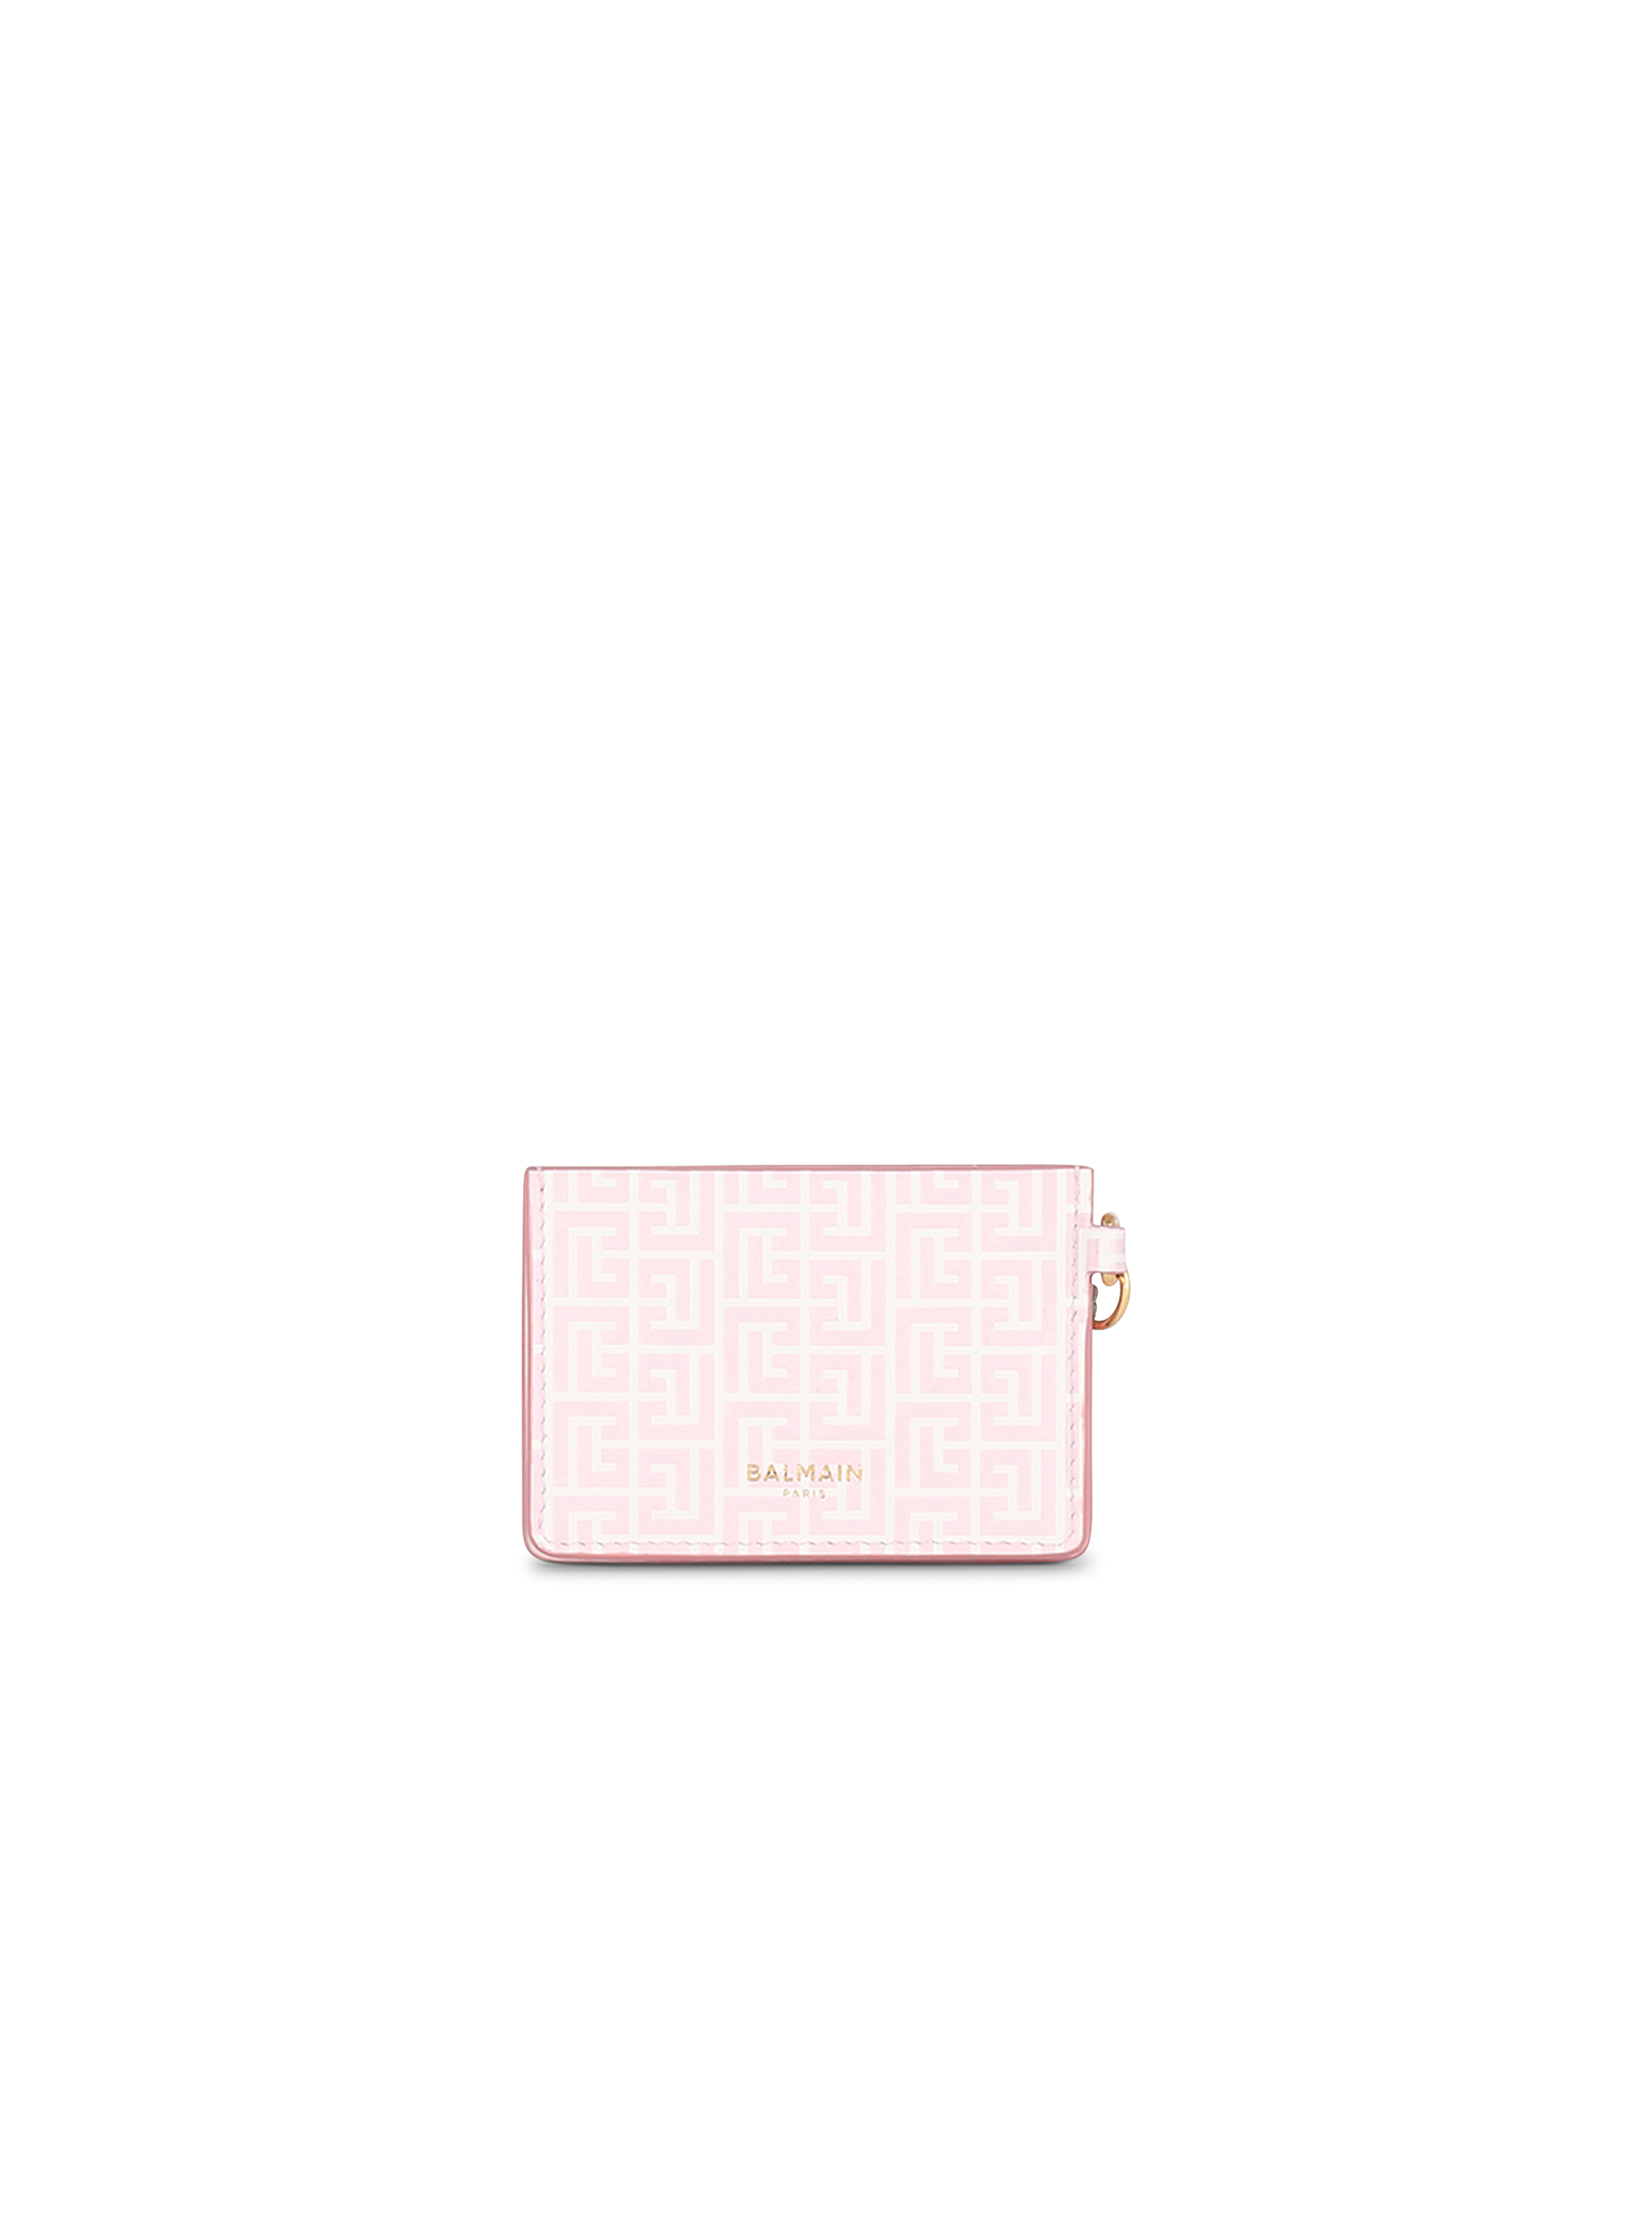 Embossed calfskin Coin card holder, pink